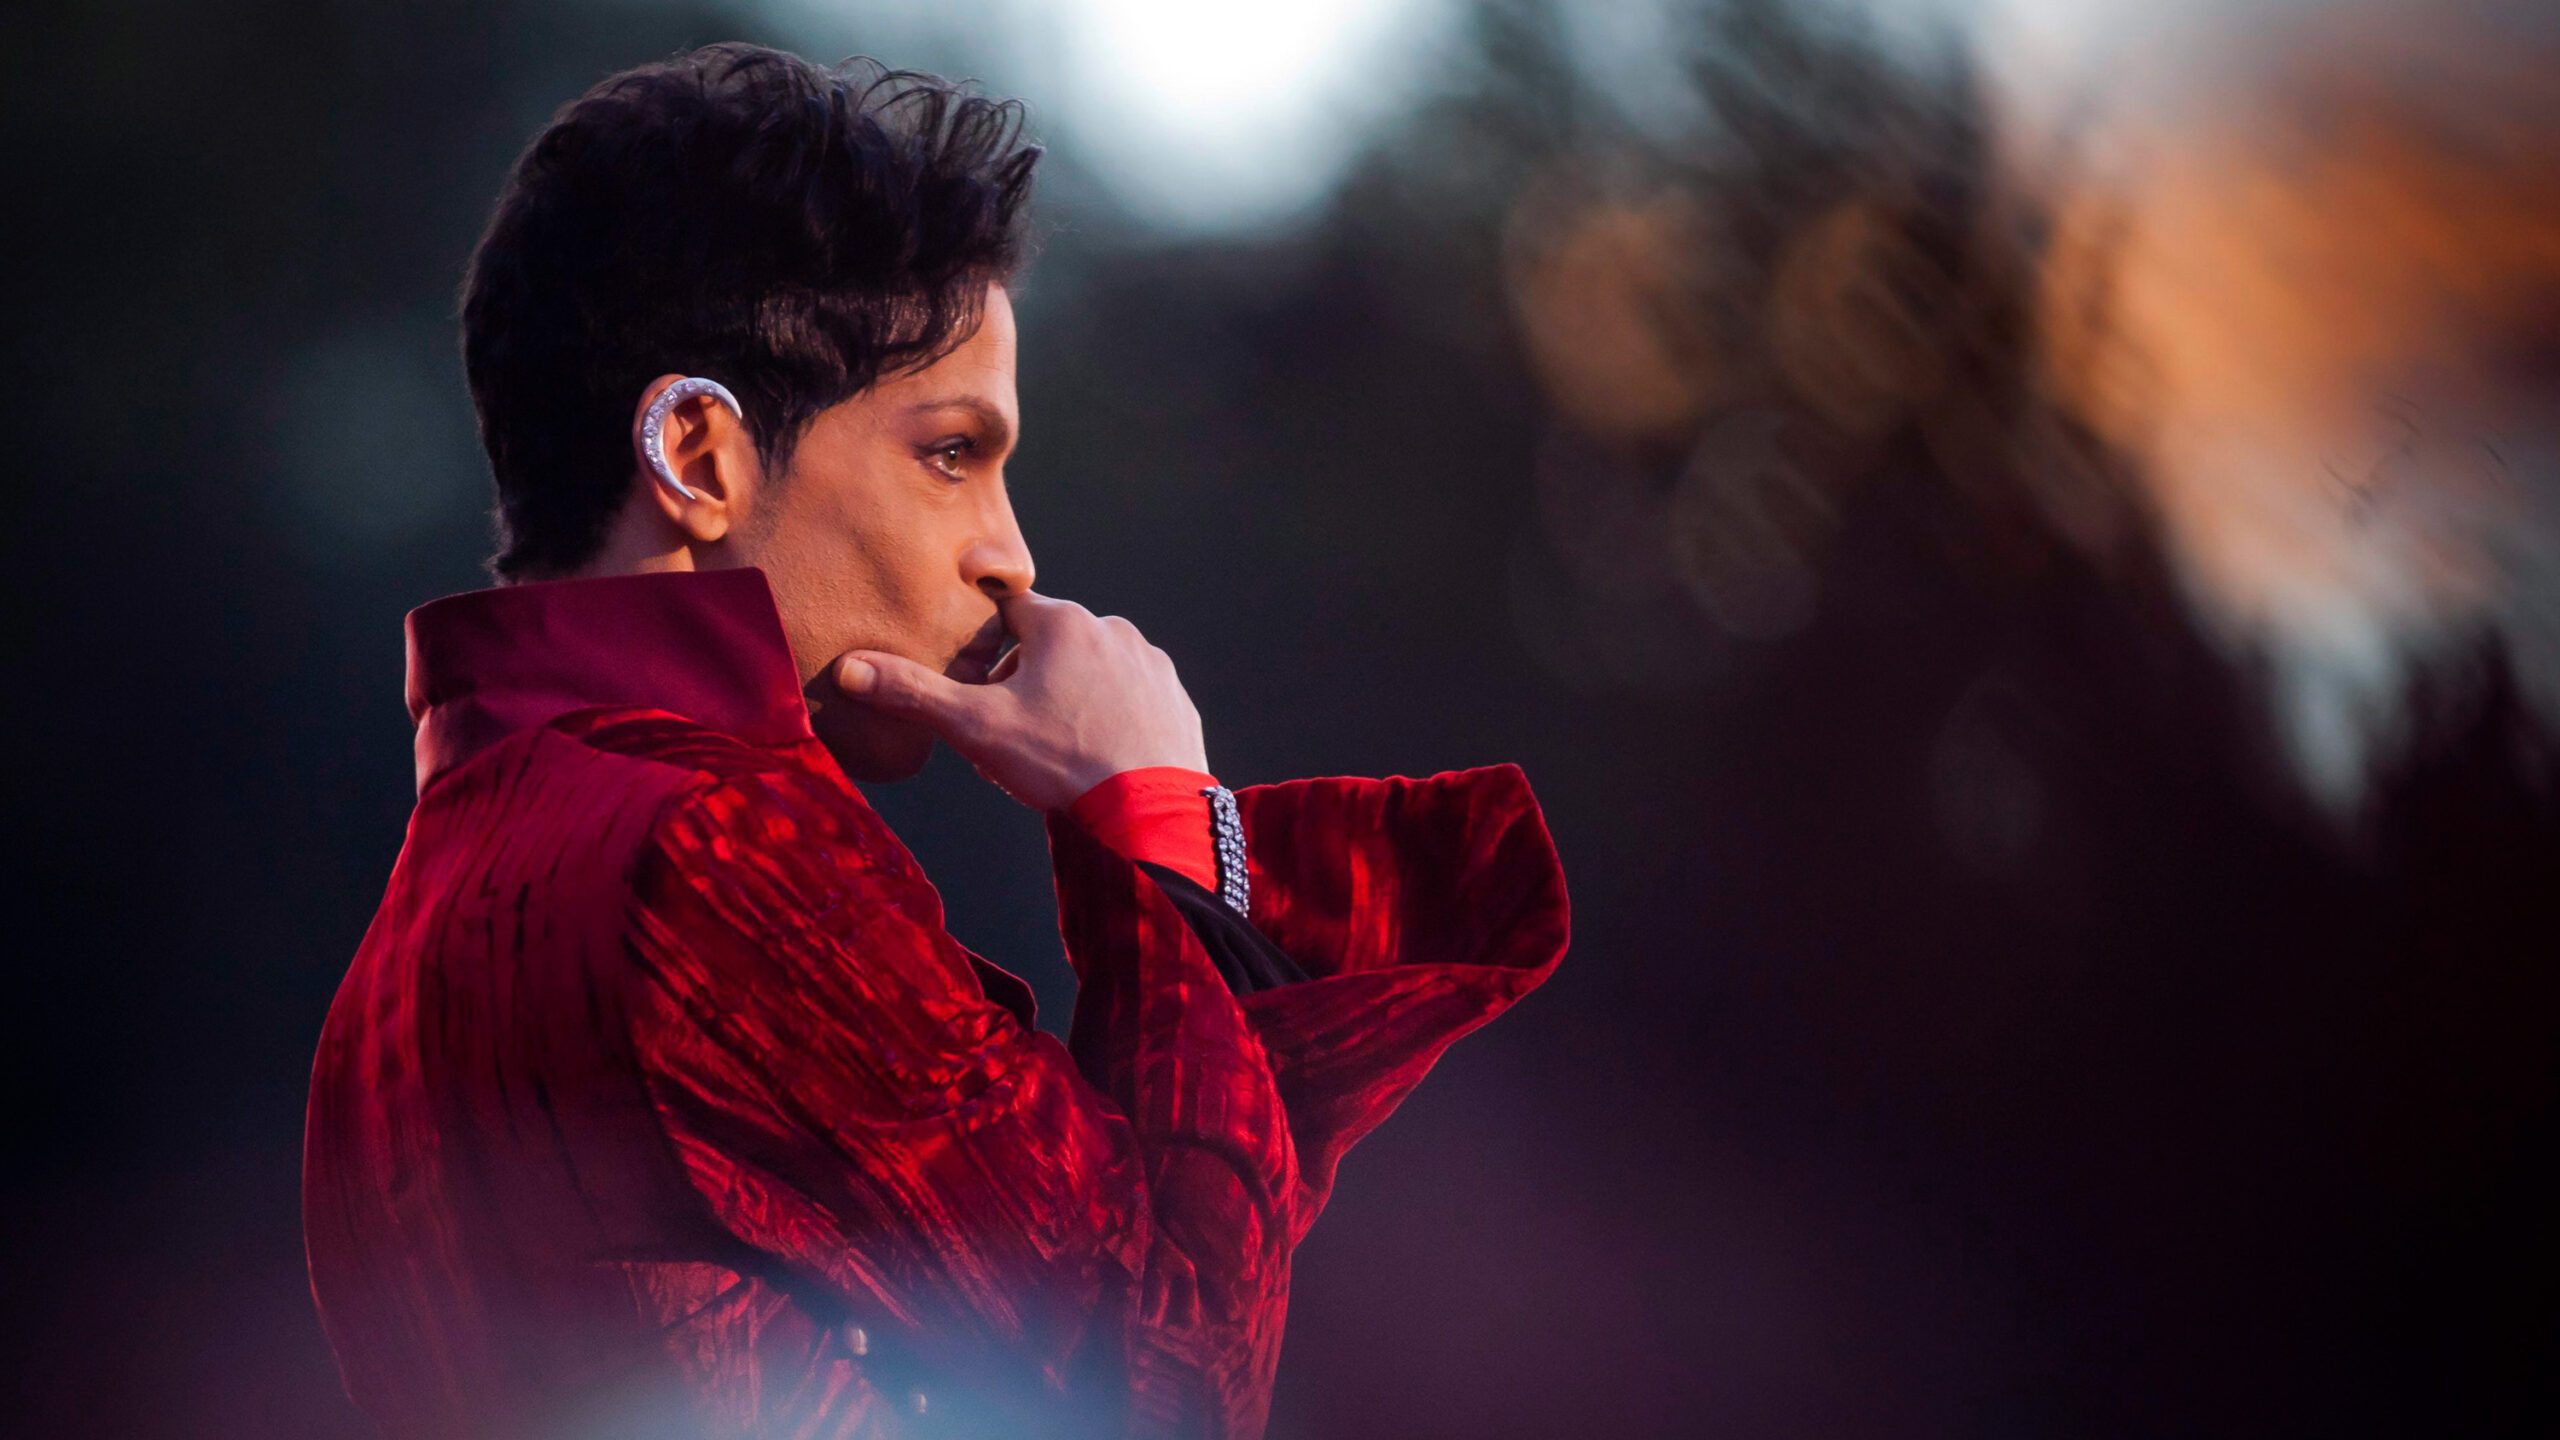 Prince death ruled a painkiller overdose